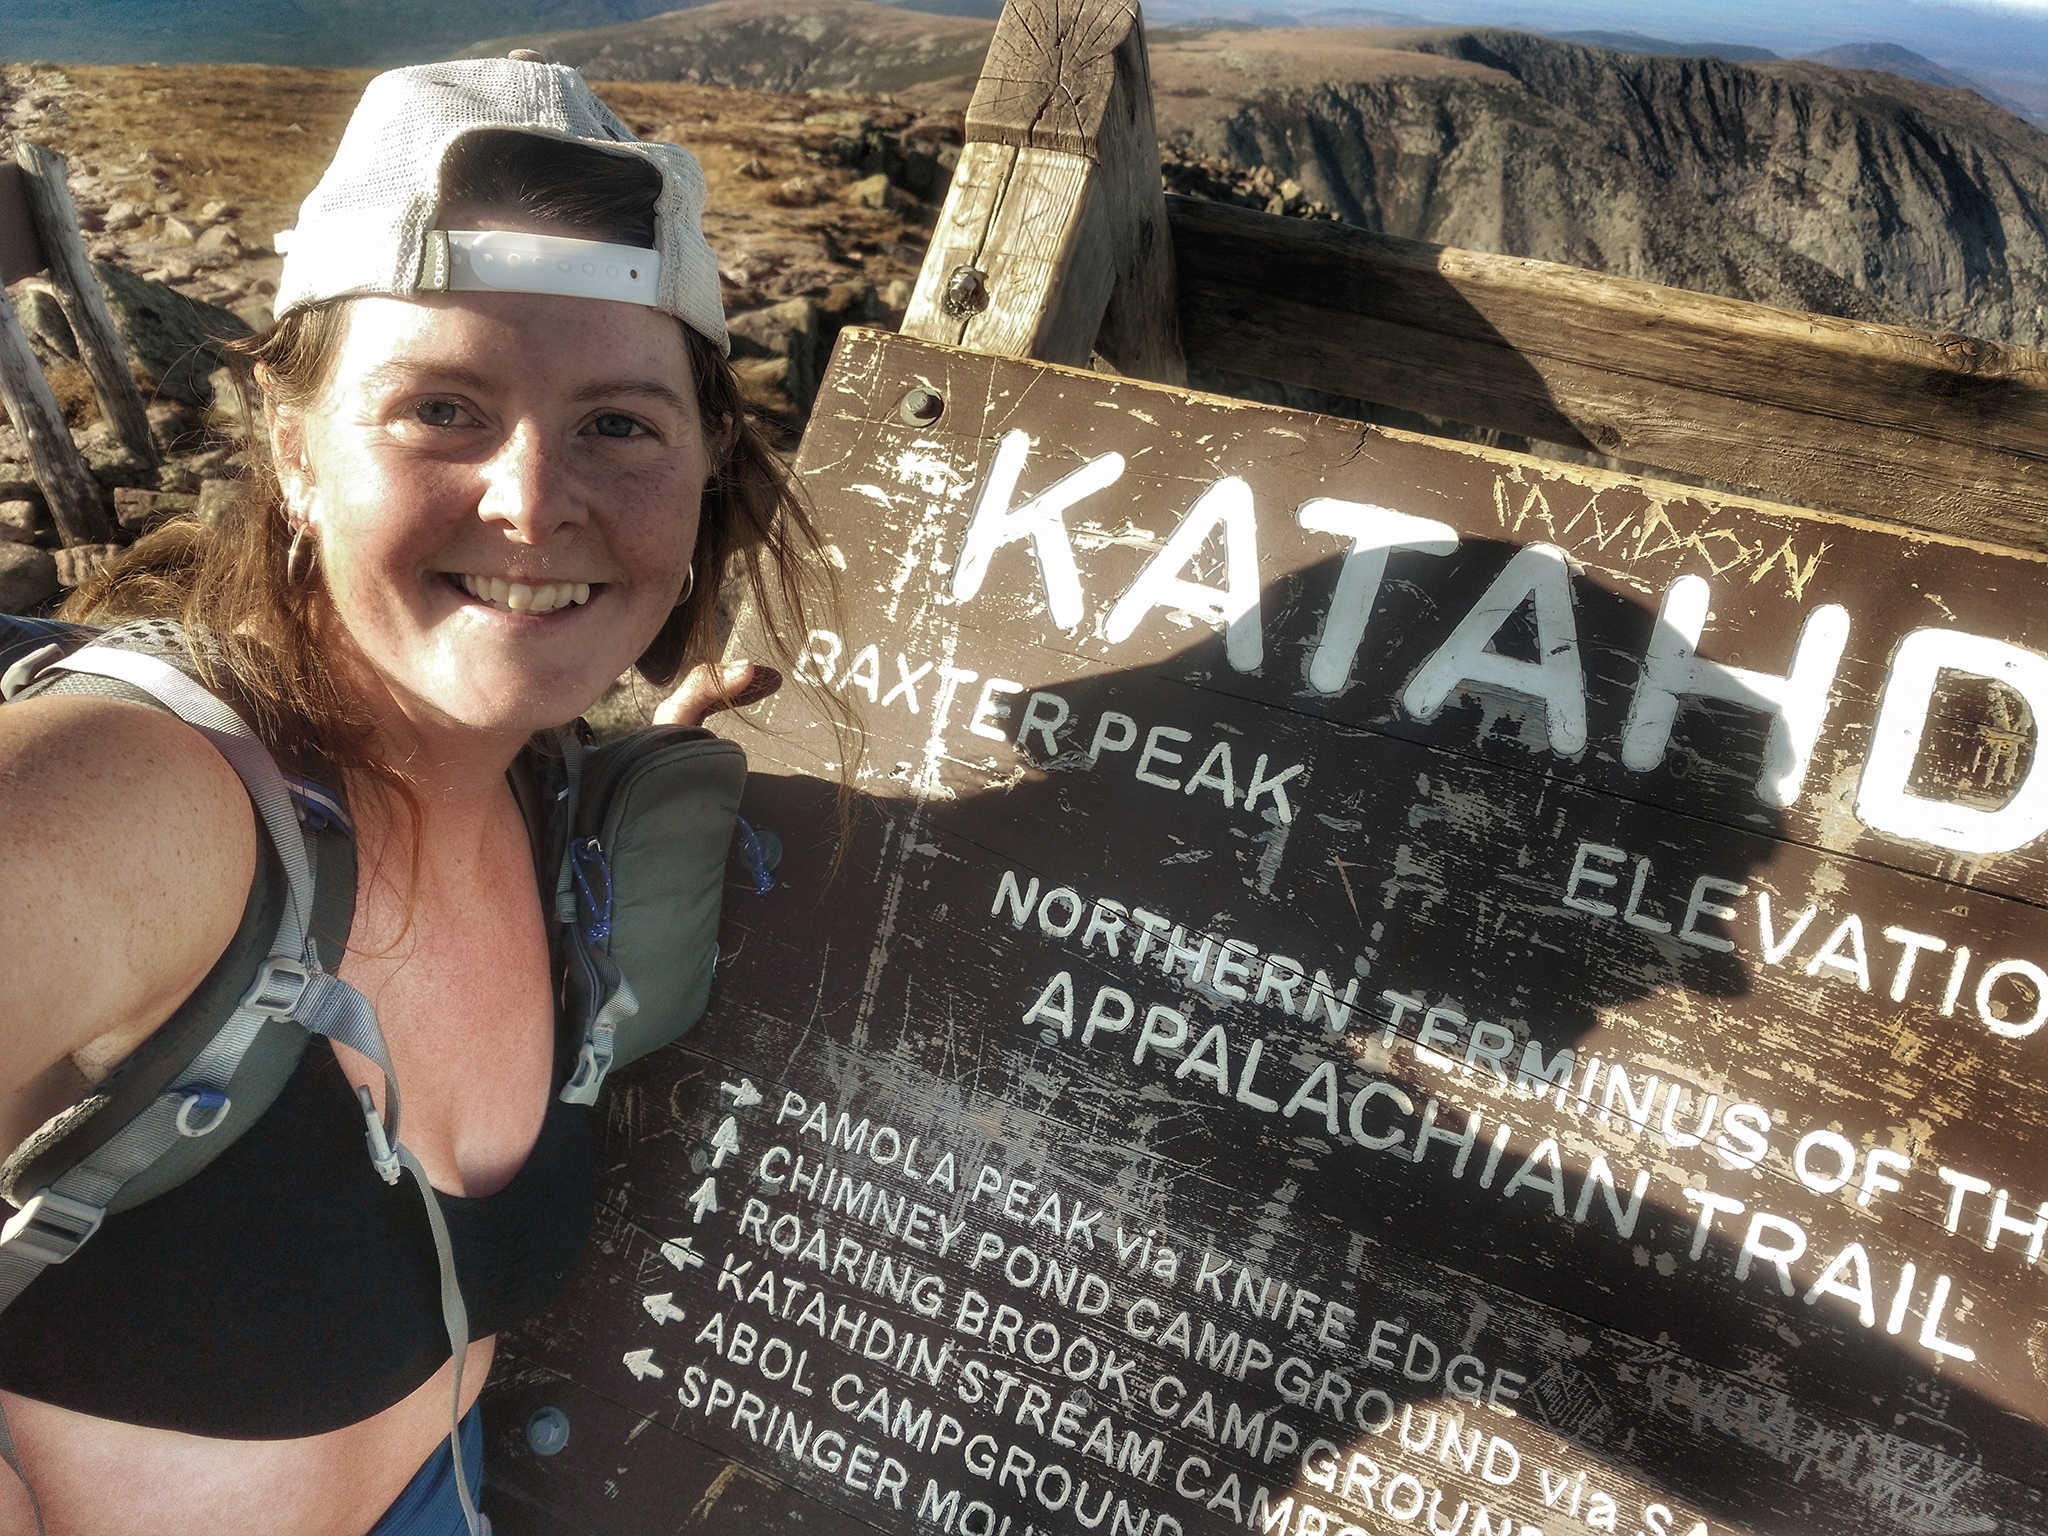 Meet Heather Anderson, National Geographic 2019 Adventurer